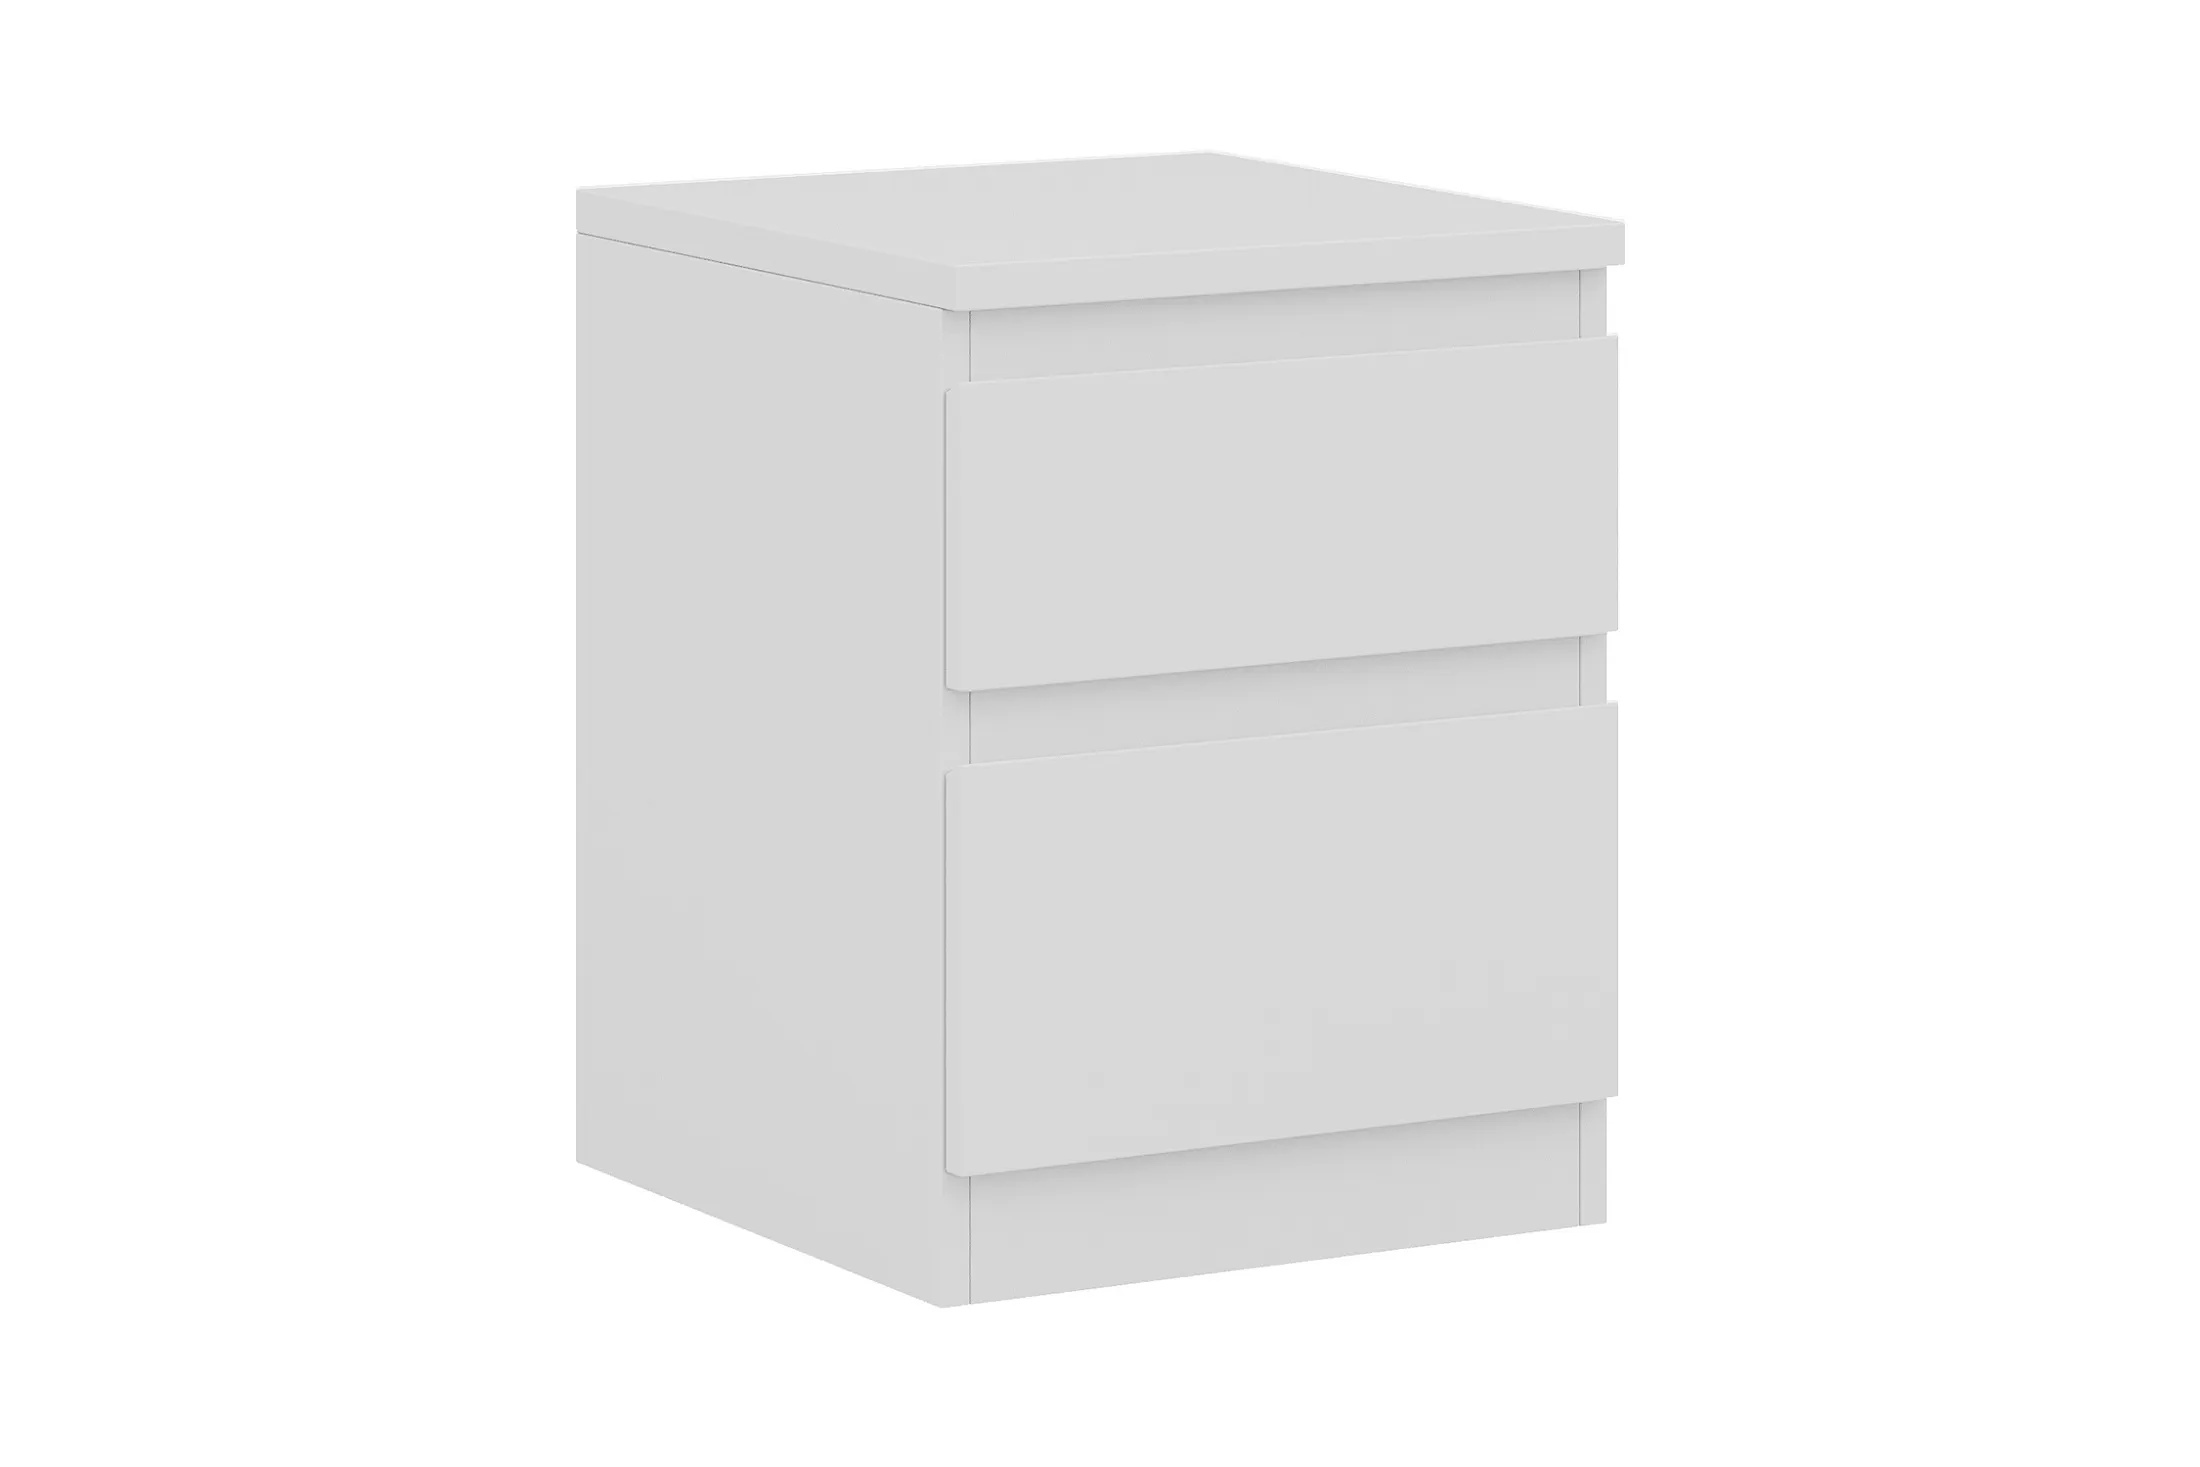 Тумба 2 ящика Кастор - аналог IKEA KULLEN,37х39х49,белый